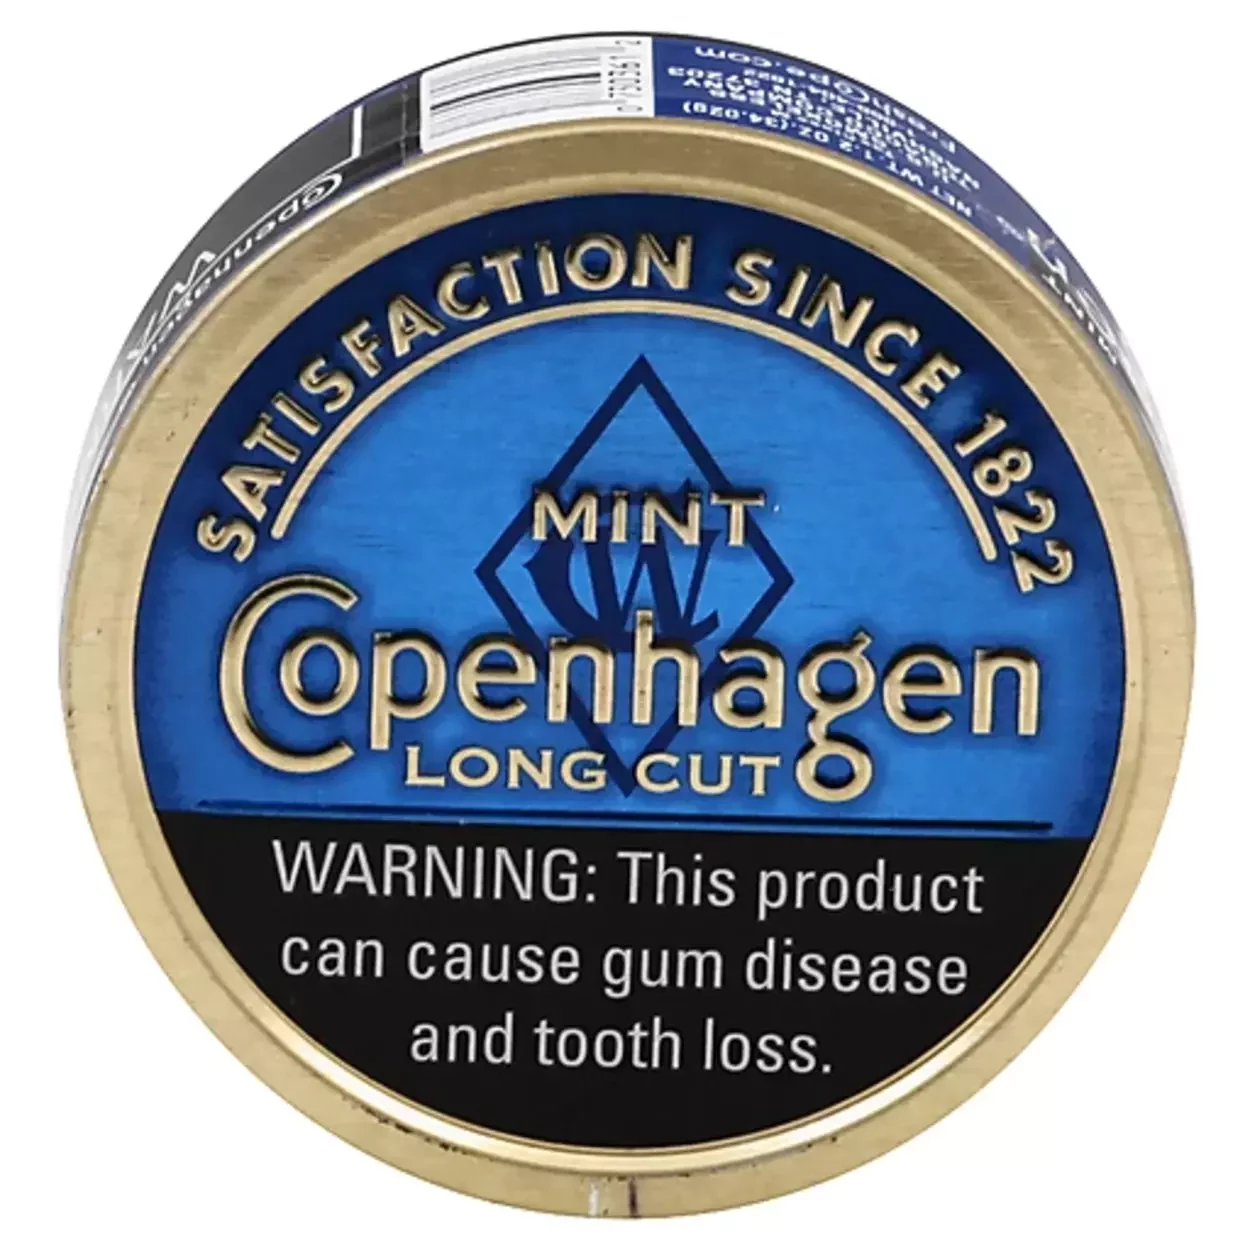 Copenhagen tobacco.